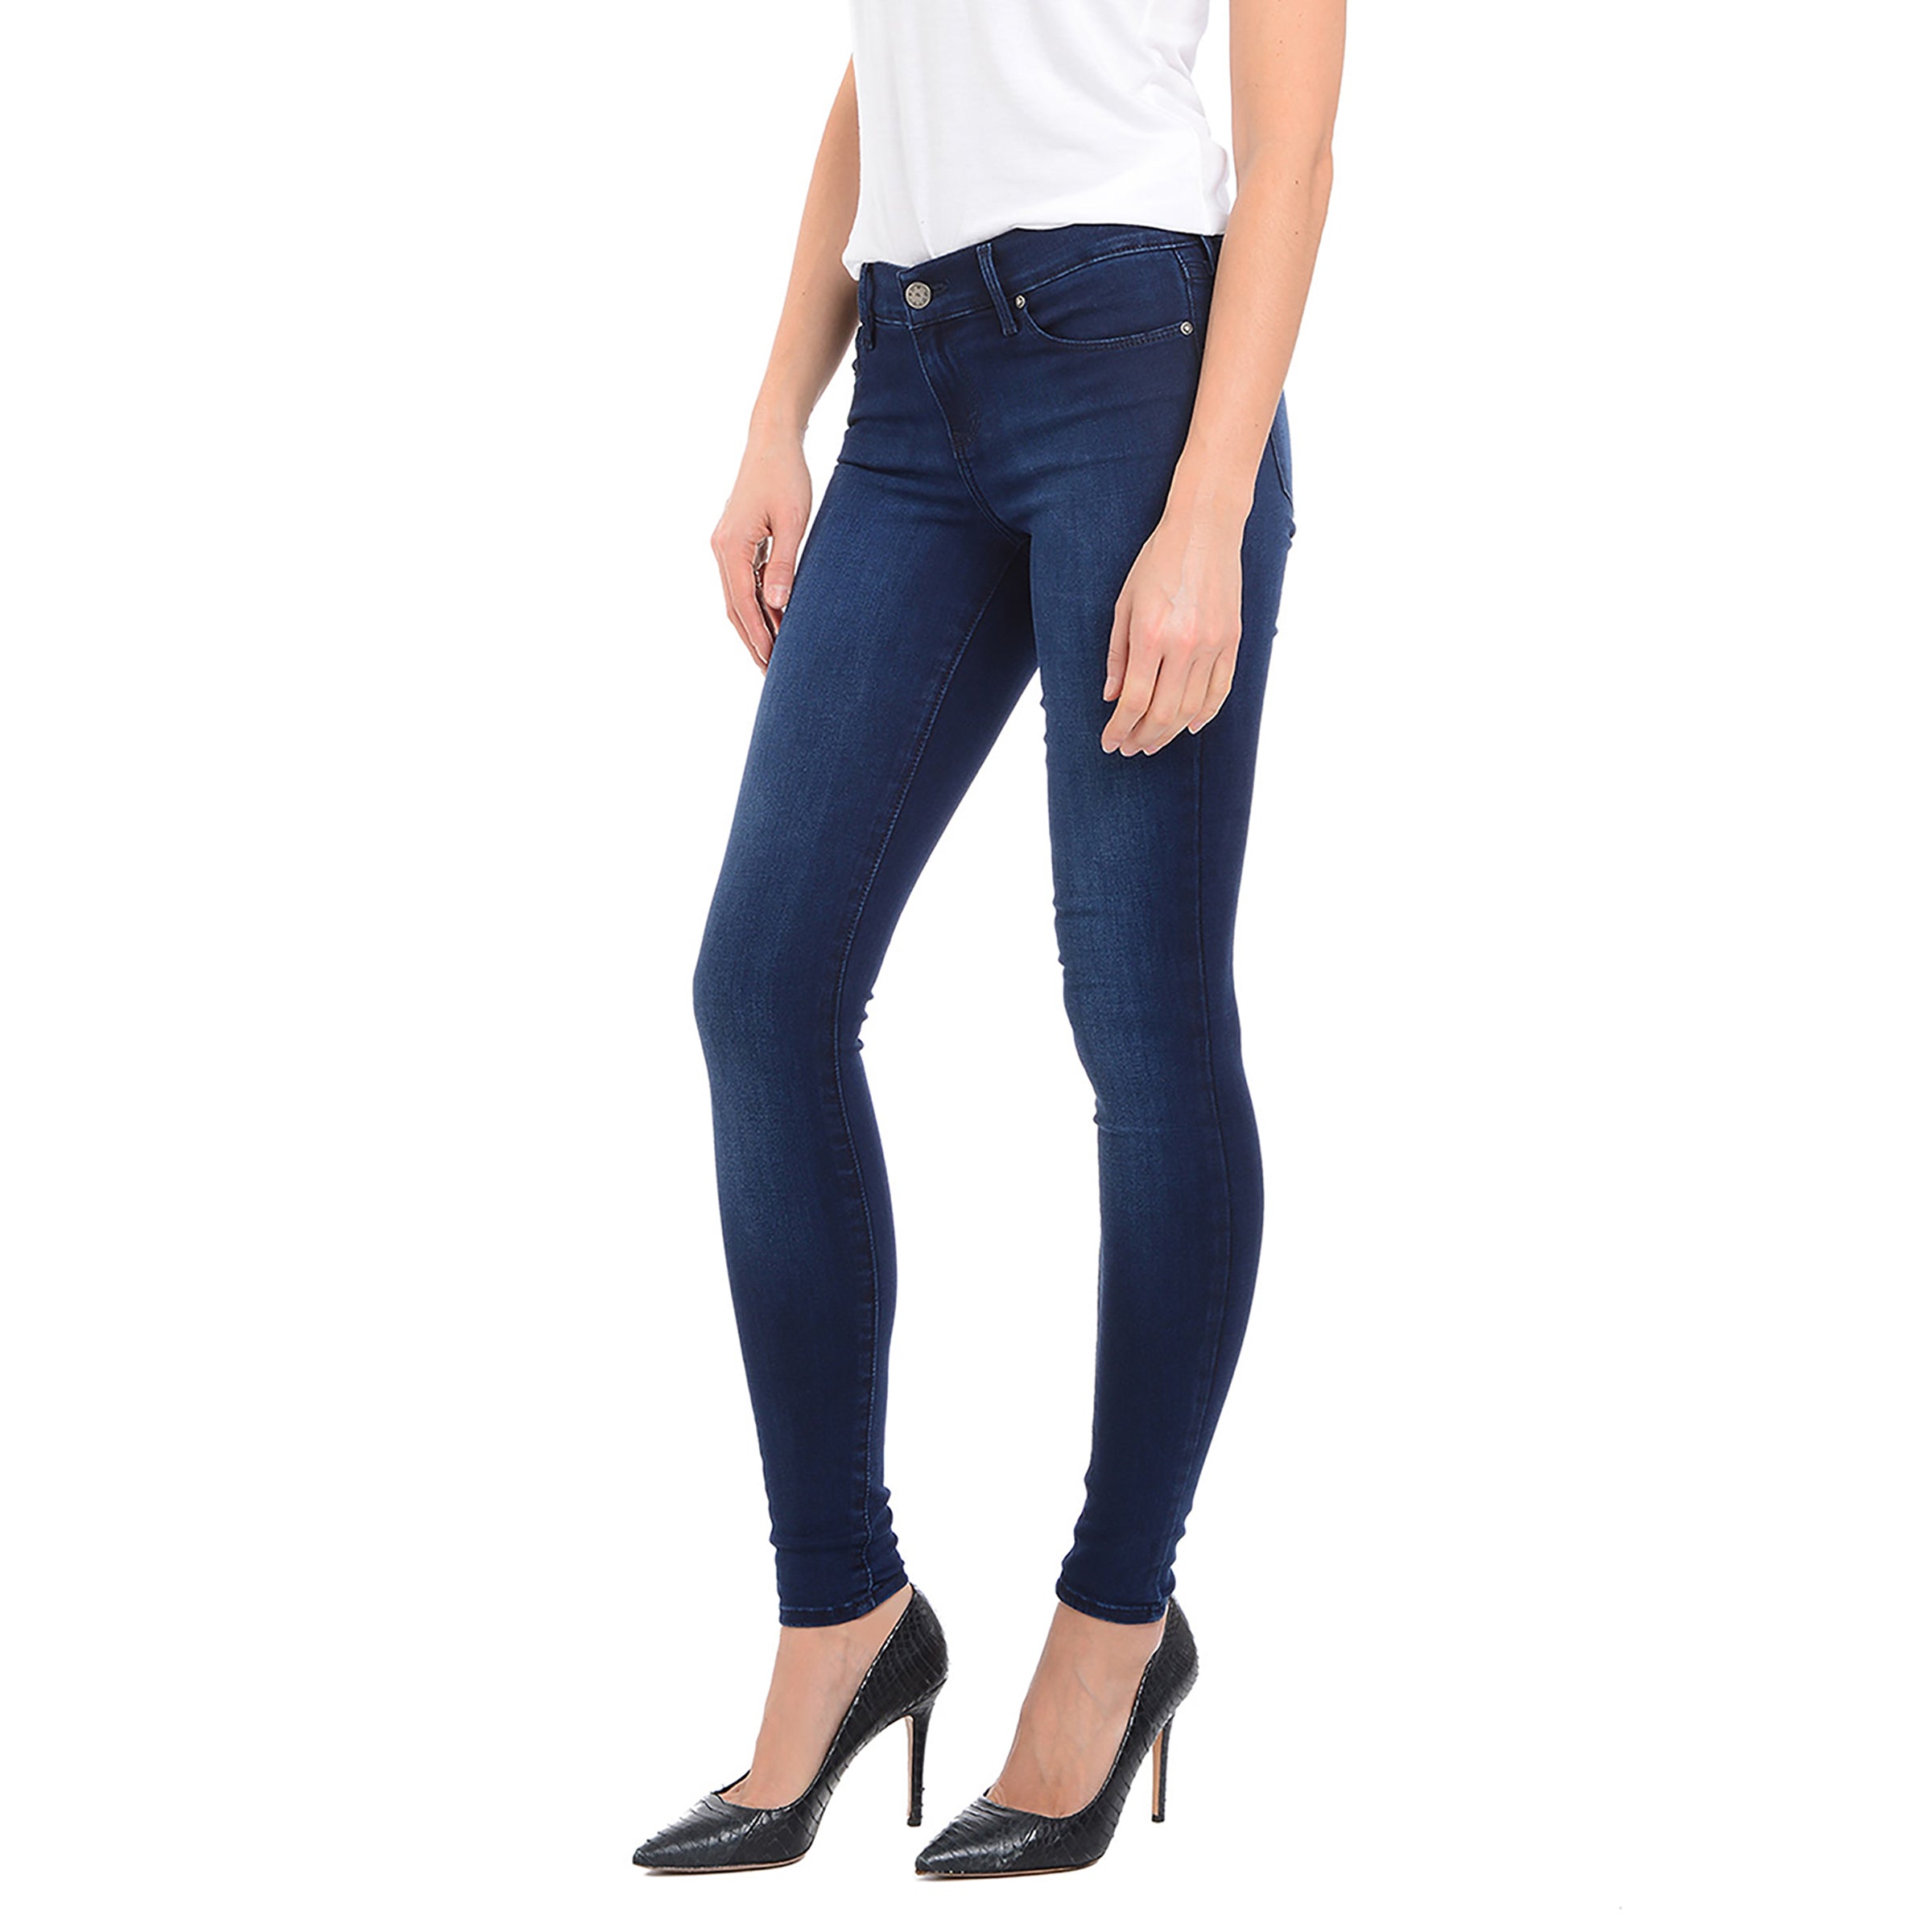 Women wearing Bleu  Médium/Foncé Mid Rise Skinny Ann Jeans